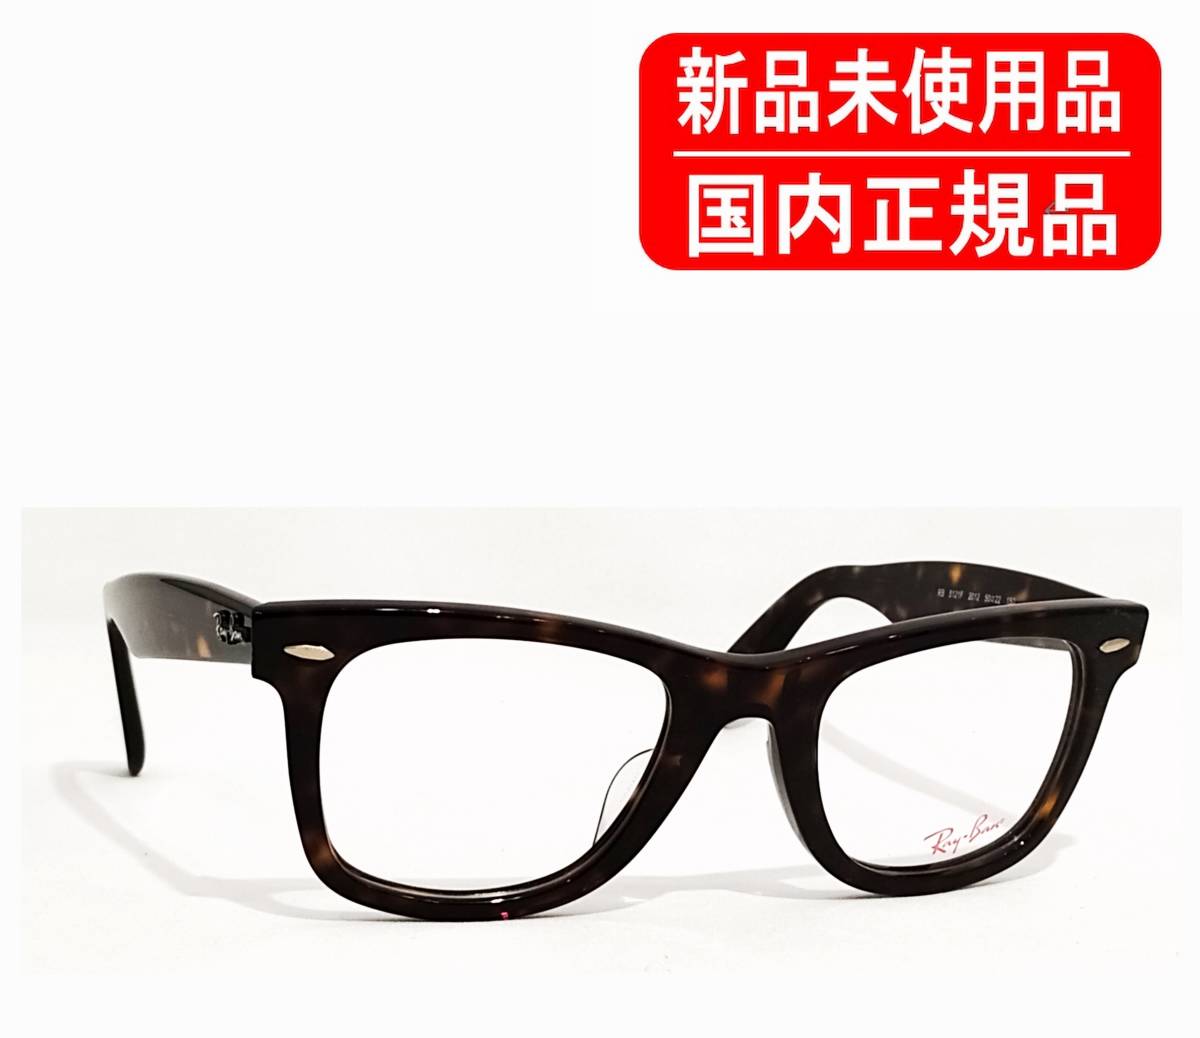 RB5121F 2012 50-22 RX5121F 国内正規品 Ray-Ban ORIGINAL WAYFARER OPTICS RX5121F レイバン ウェイファーラー 正規保証書 フレーム 眼鏡